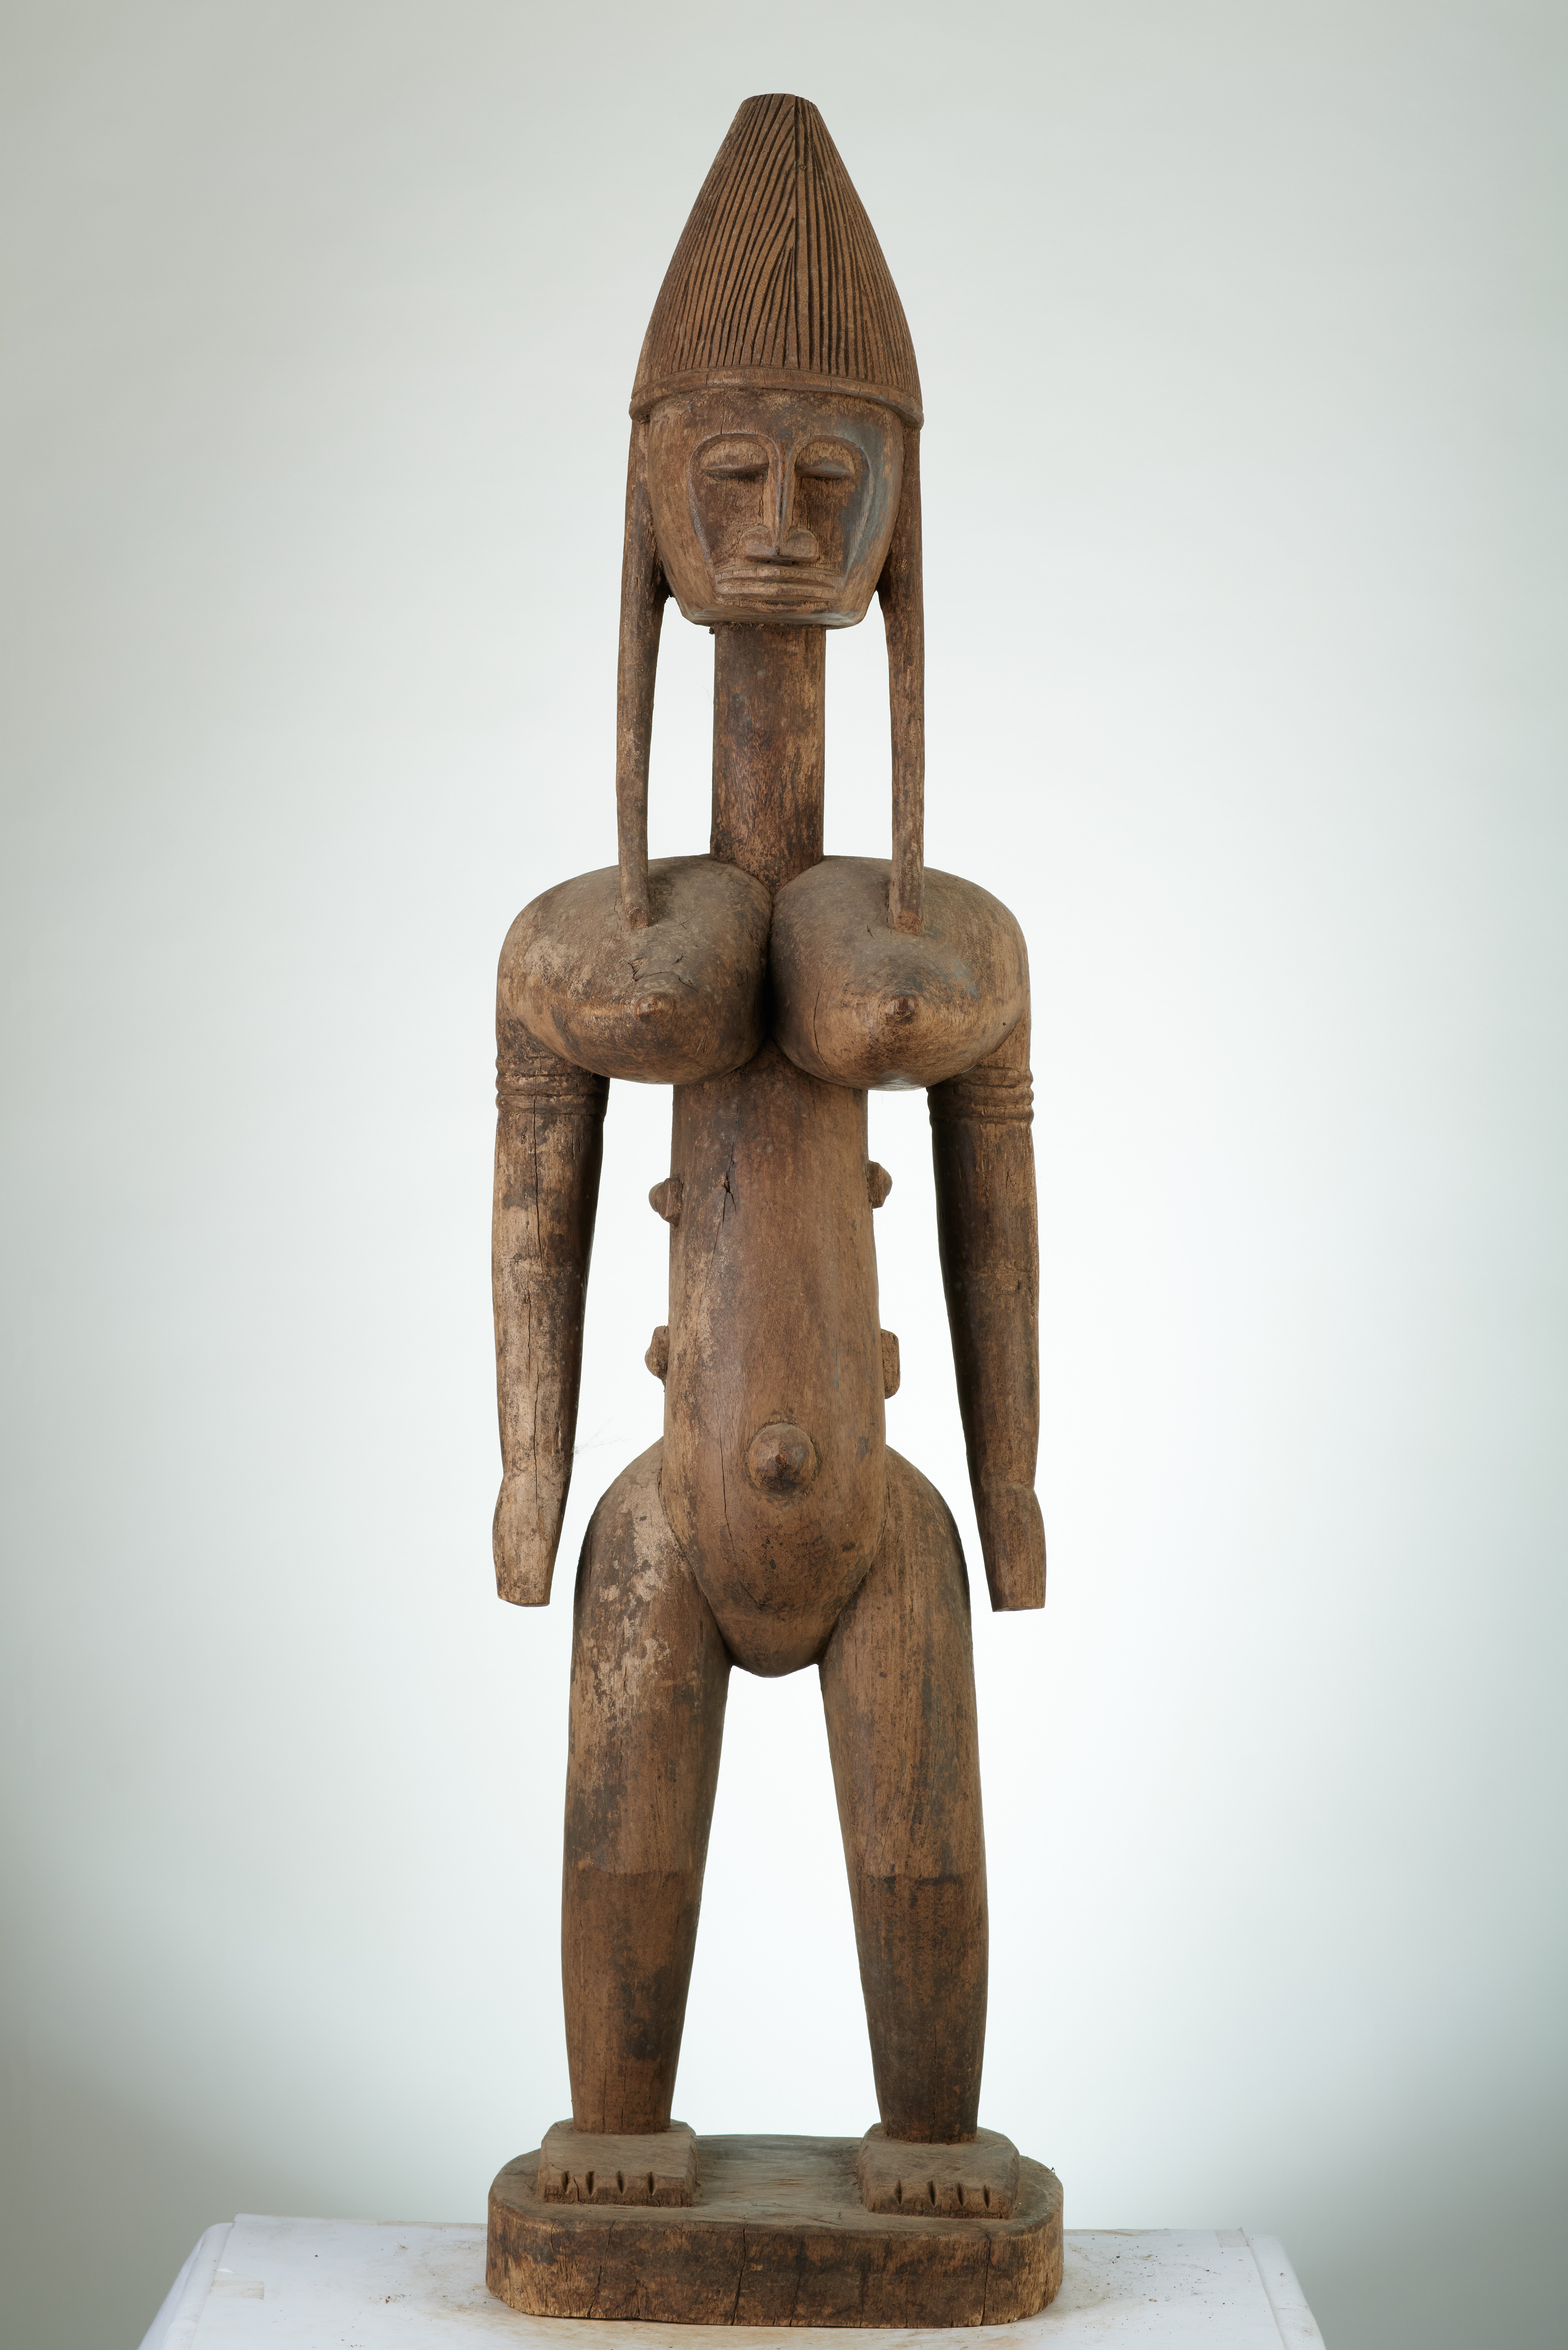 bambara (statue), d`afrique : MALI, statuette bambara (statue), masque ancien africain bambara (statue), art du MALI - Art Africain, collection privées Belgique. Statue africaine de la tribu des bambara (statue), provenant du MALI, 1881:Maternité Bambara .Ancêtre debout portant son enfant dans le dos, nommé Guandous ou appartenant à la societé GUAN H100cm.La coiffure en forme de crête et une forte poitrinne 1ère moitié 20eme sc
( col.Sibiry Malien)

Rechtstaand Bambara  moederschap.Een voorouder dat haar kind draagt op haar rug Guandousou genaamd.Ze maakt deel uit van de GUAN societeit.Ze heeft een  mooie haartooi in kamvorm en grote borsten. 1ste helft 20ste eeuw.(Kol.SIBIRY) . art,culture,masque,statue,statuette,pot,ivoire,exposition,expo,masque original,masques,statues,statuettes,pots,expositions,expo,masques originaux,collectionneur d`art,art africain,culture africaine,masque africain,statue africaine,statuette africaine,pot africain,ivoire africain,exposition africain,expo africain,masque origina africainl,masques africains,statues africaines,statuettes africaines,pots africains,expositions africaines,expo africaines,masques originaux  africains,collectionneur d`art africain